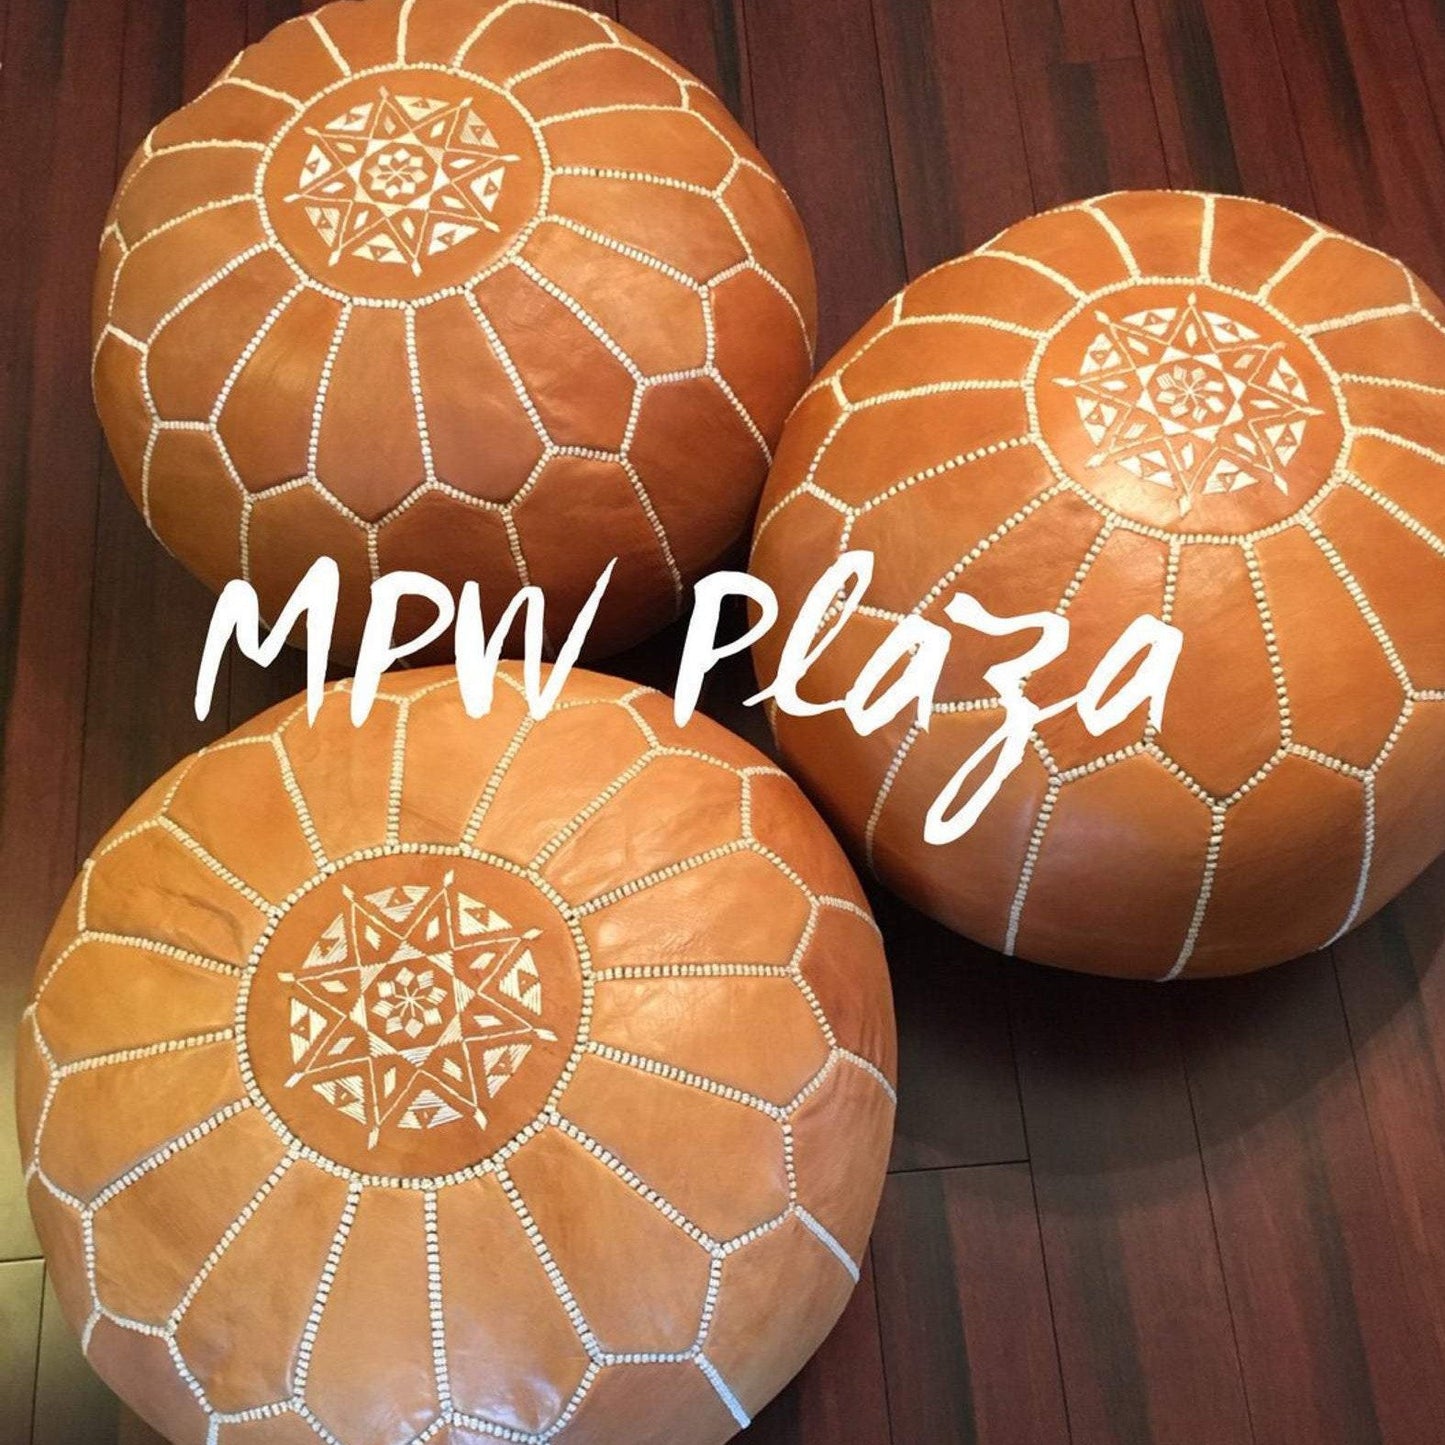 MPW Plaza® Moroccan Pouf, Light Tan tone, 14" x 20" Topshelf Moroccan Leather,  couture ottoman (Stuffed) freeshipping - MPW Plaza®